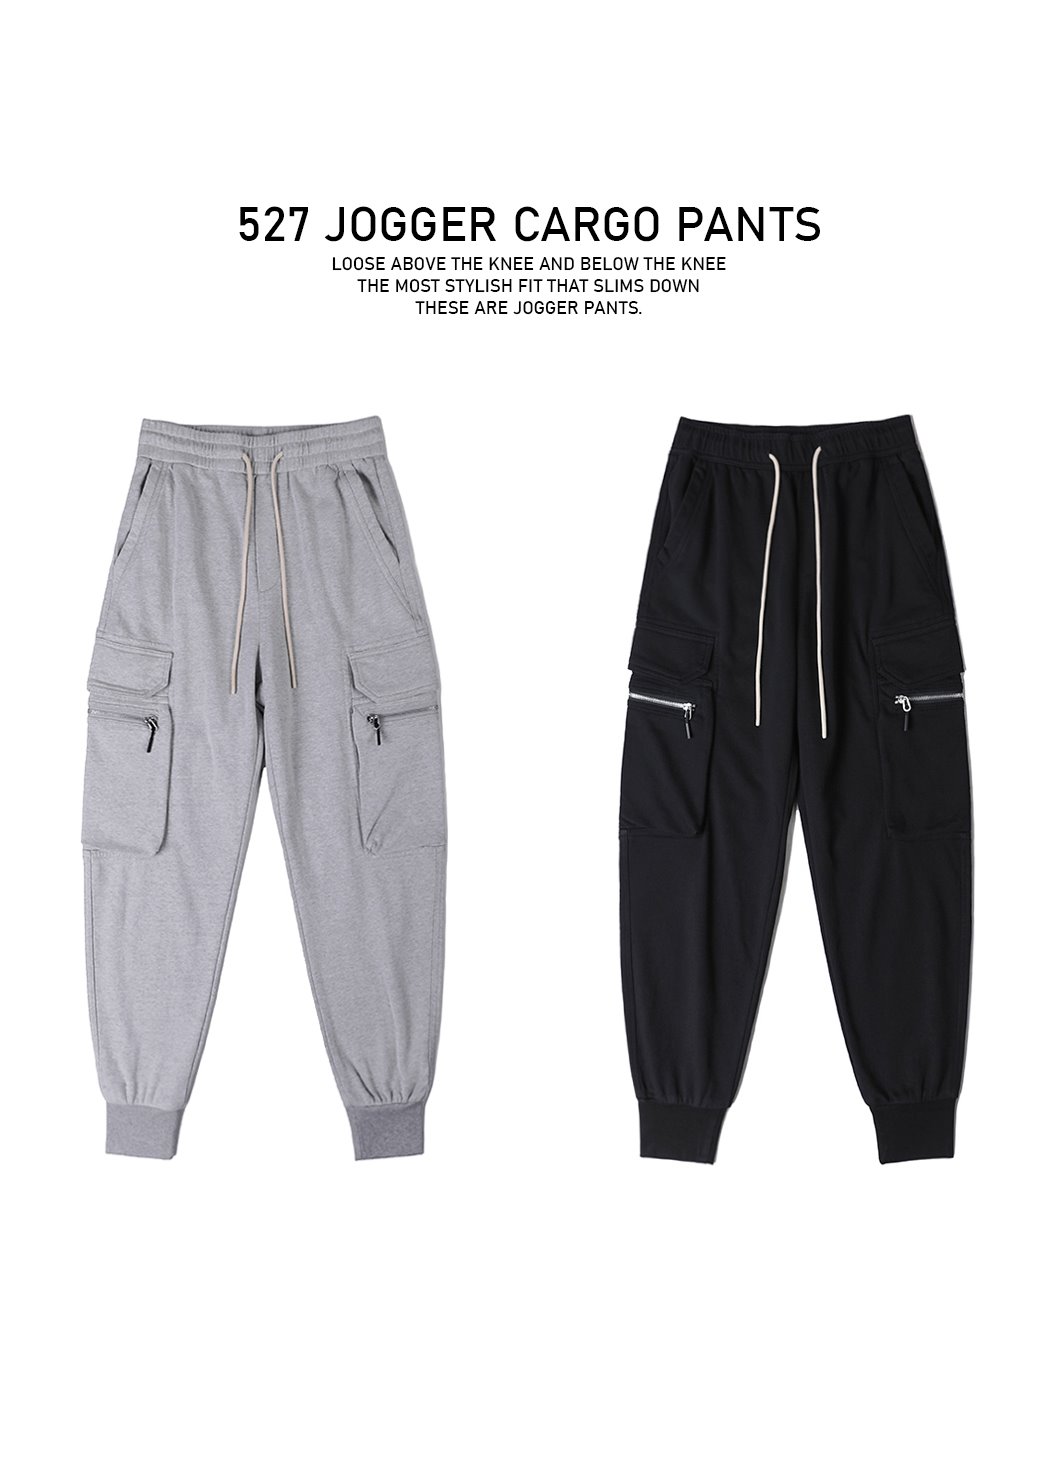 527 Jogger Cargo Pants-2Color